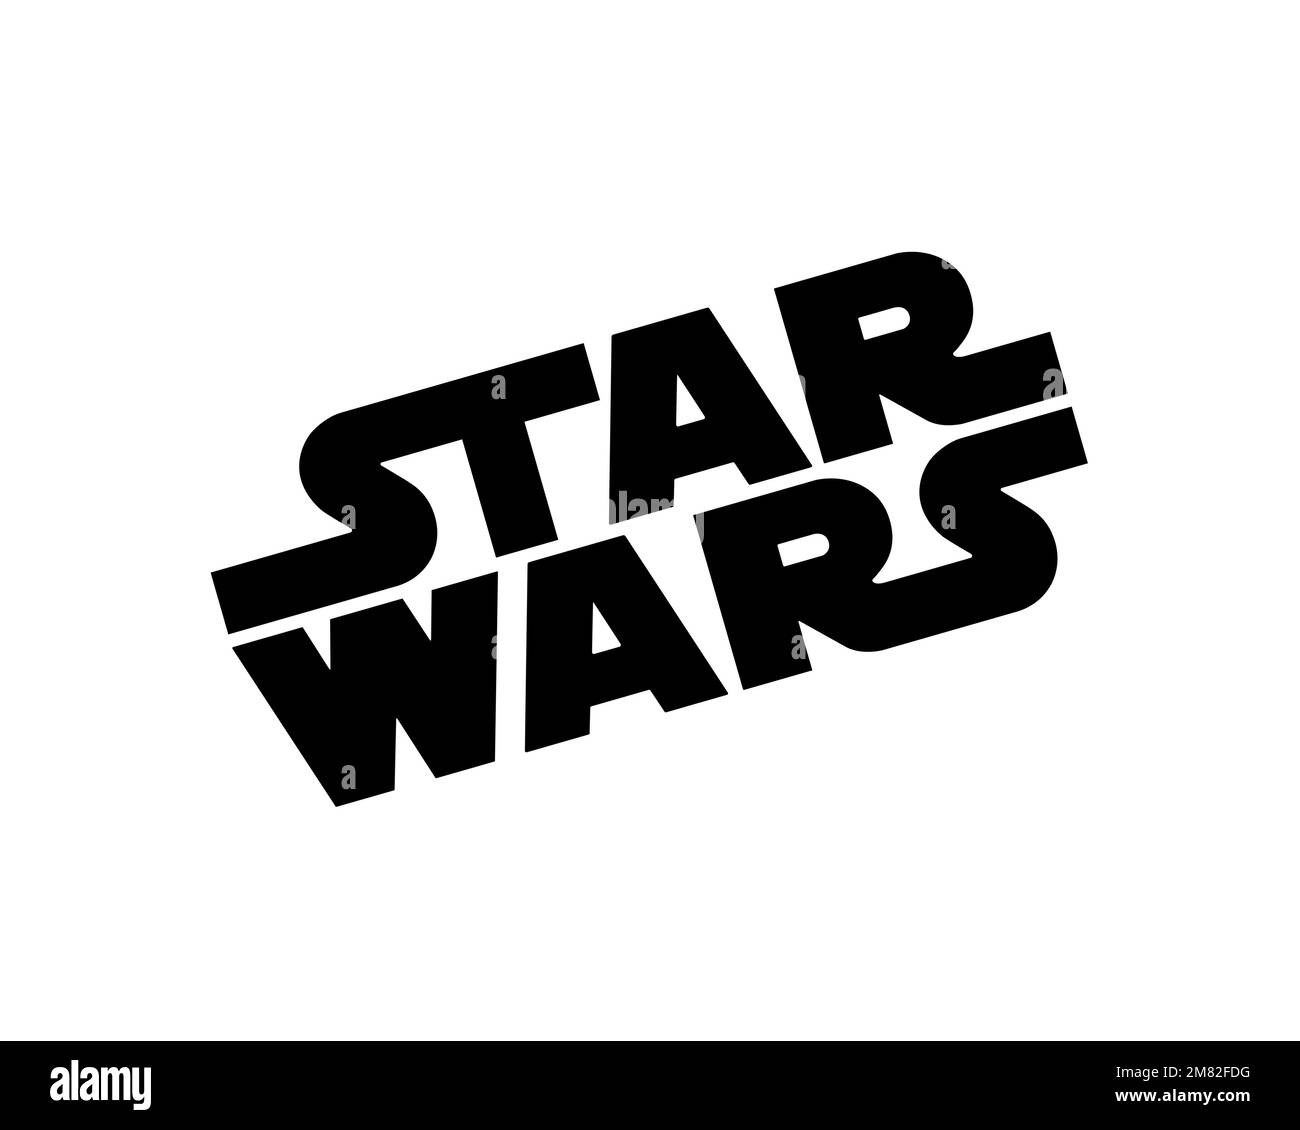 Star Wars, rotated logo, white background Stock Photo